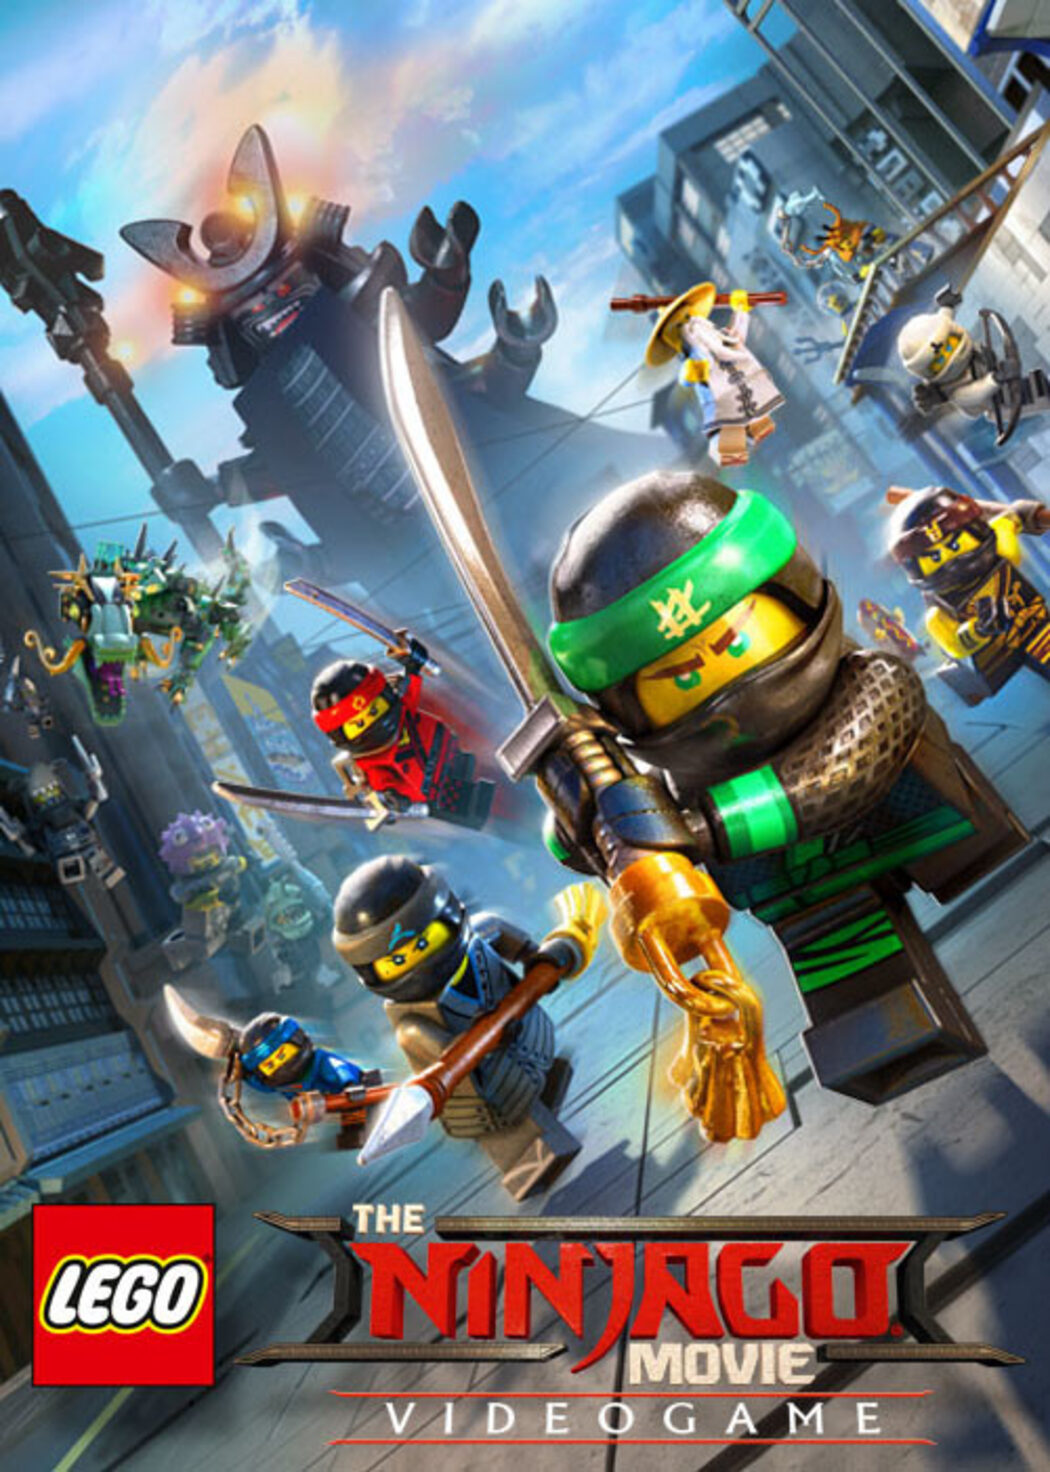 LEGO Ninjago Movie Video Game -PlayStation 4 